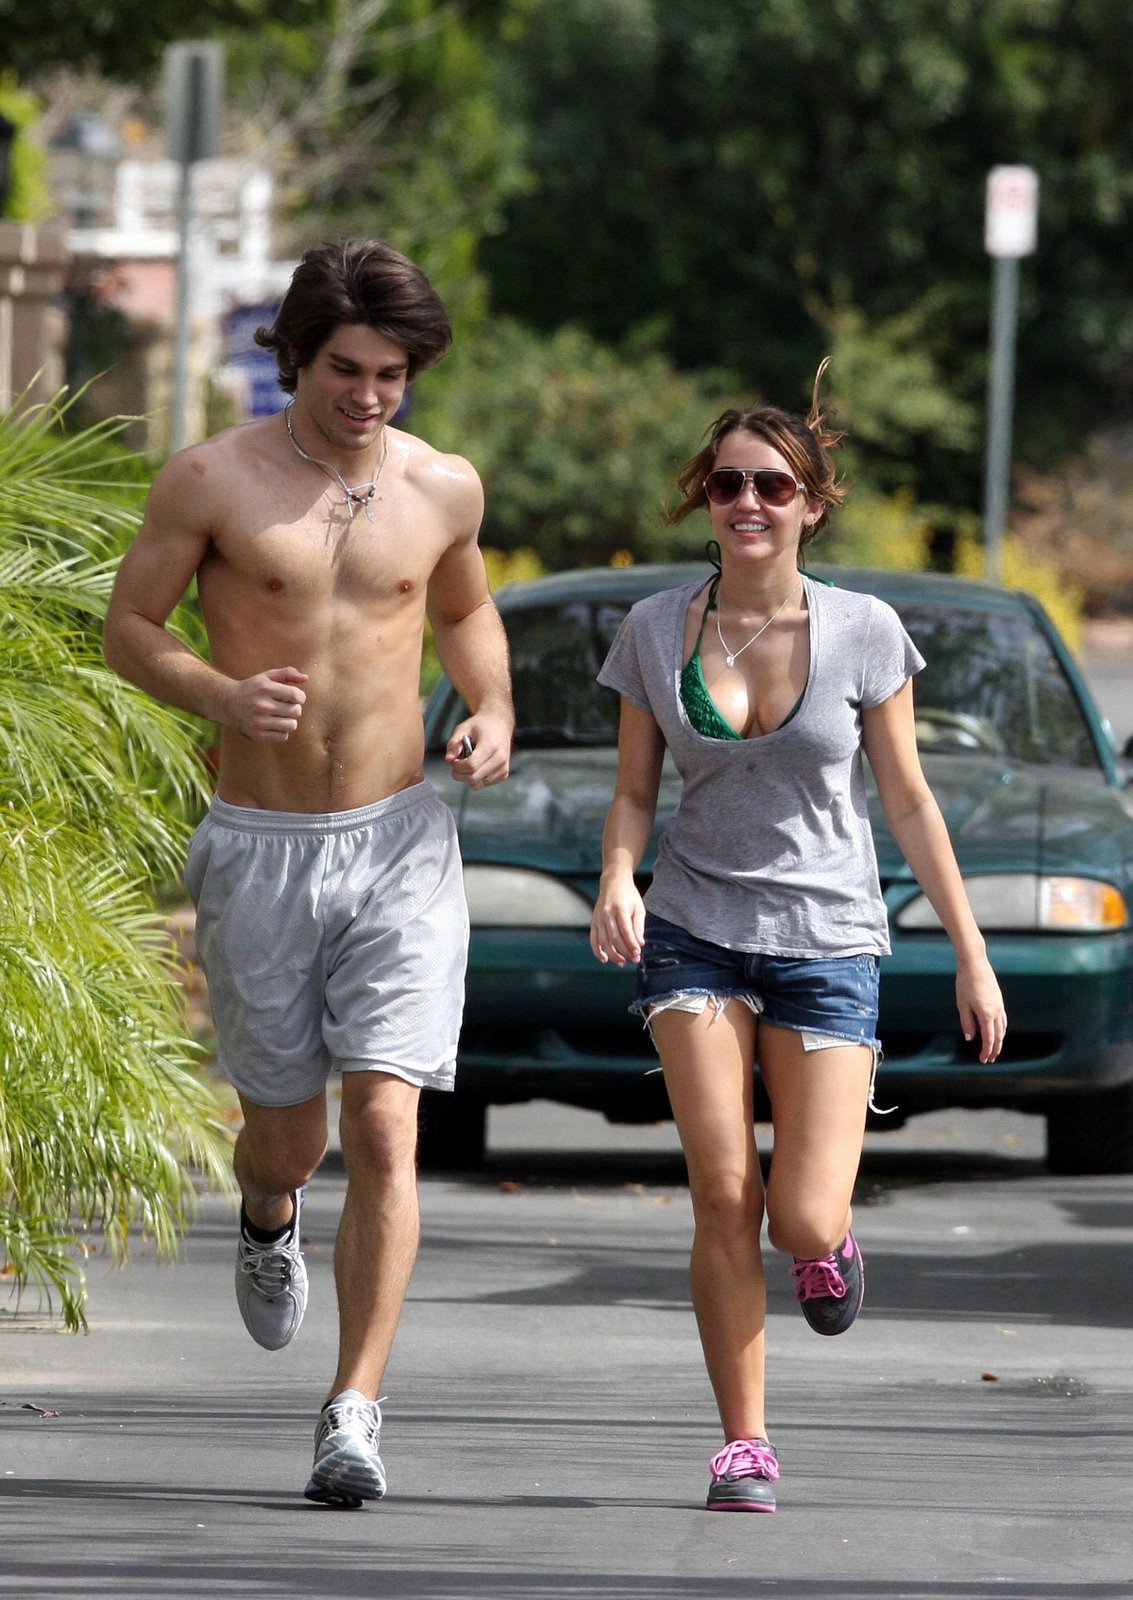 Miley Cyrus Goes Justin Gaston Shirtless Jogging: Photo 1758541